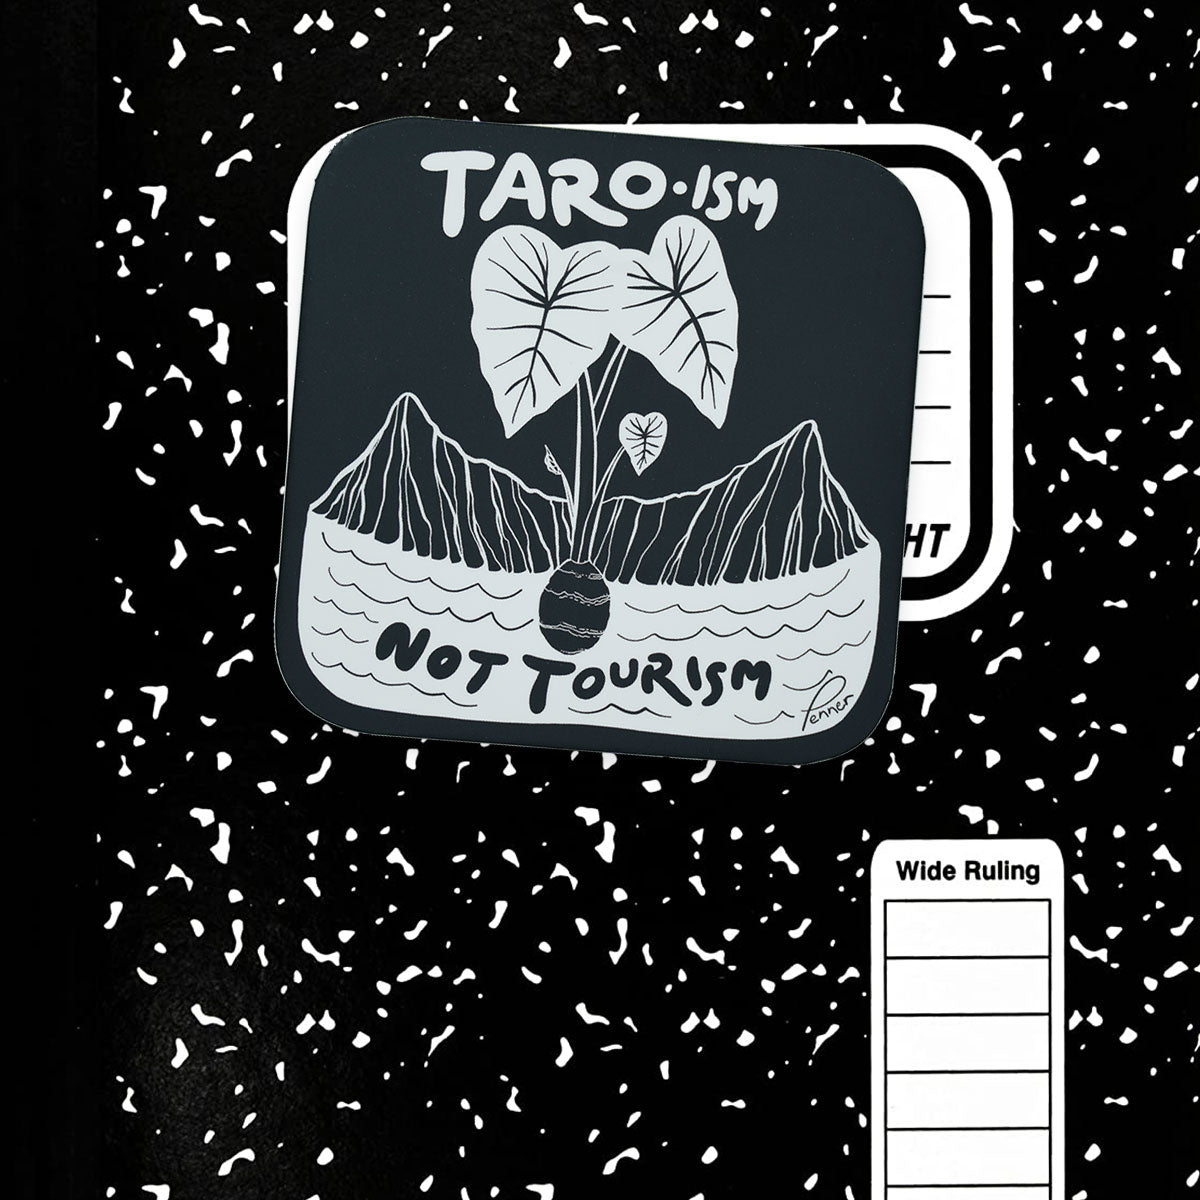 Taro-ism Not Tourism Pepili - Original Art 4" Vinyl Sticker